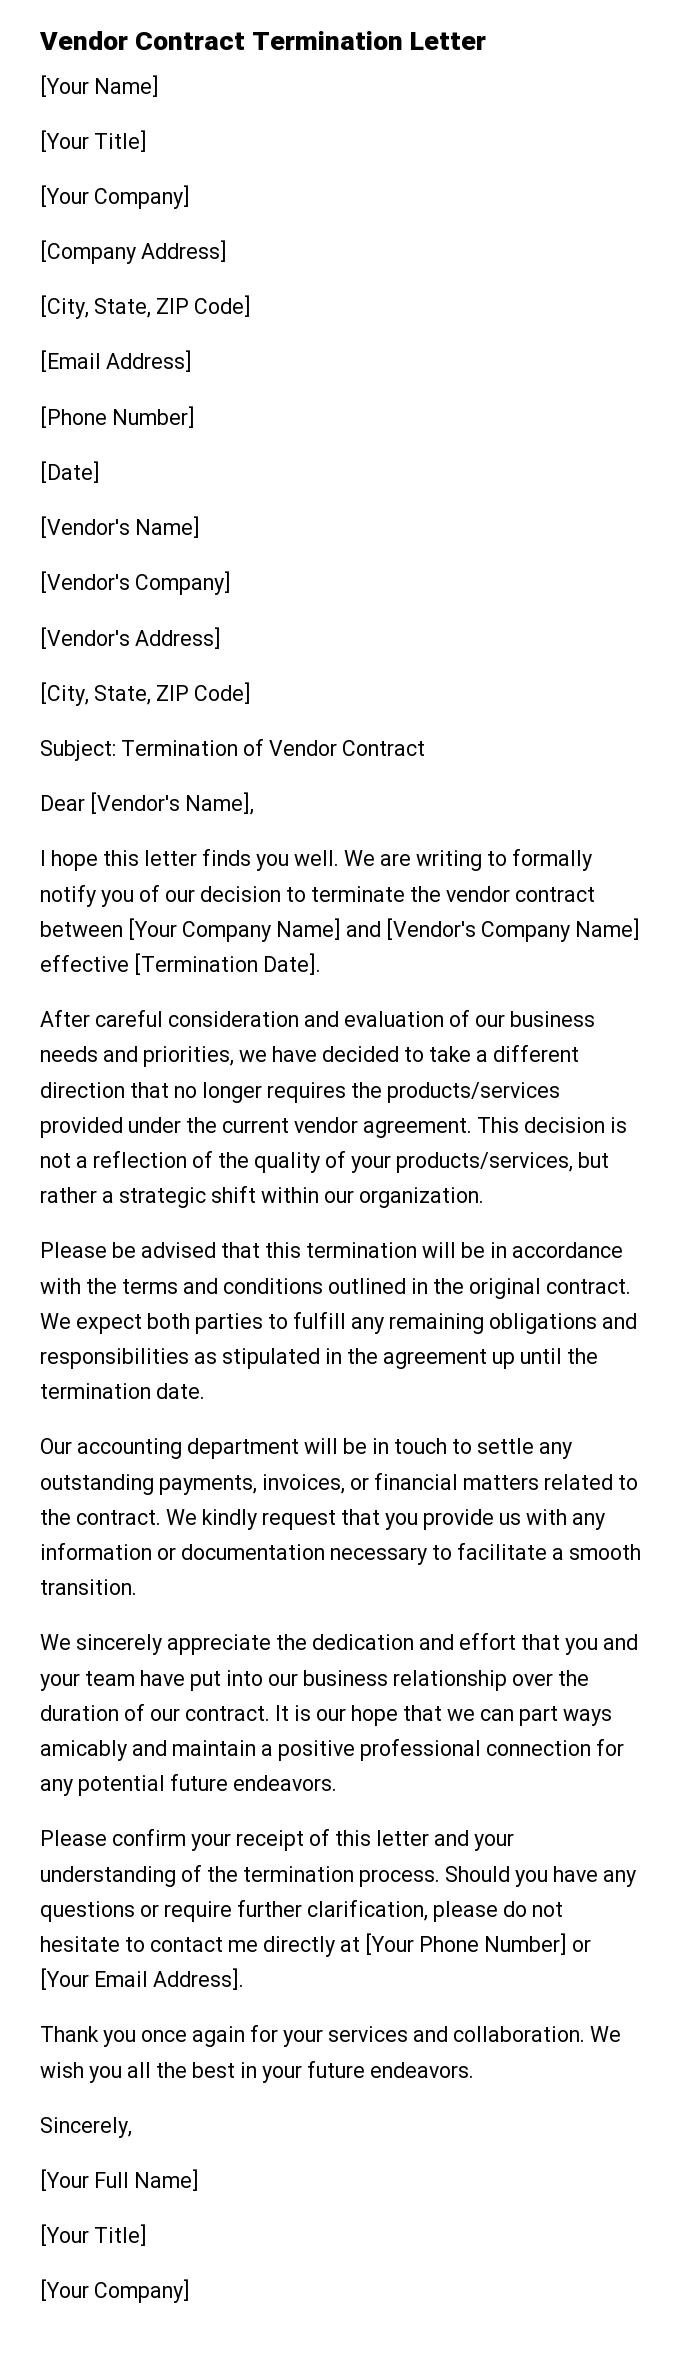 Vendor Contract Termination Letter